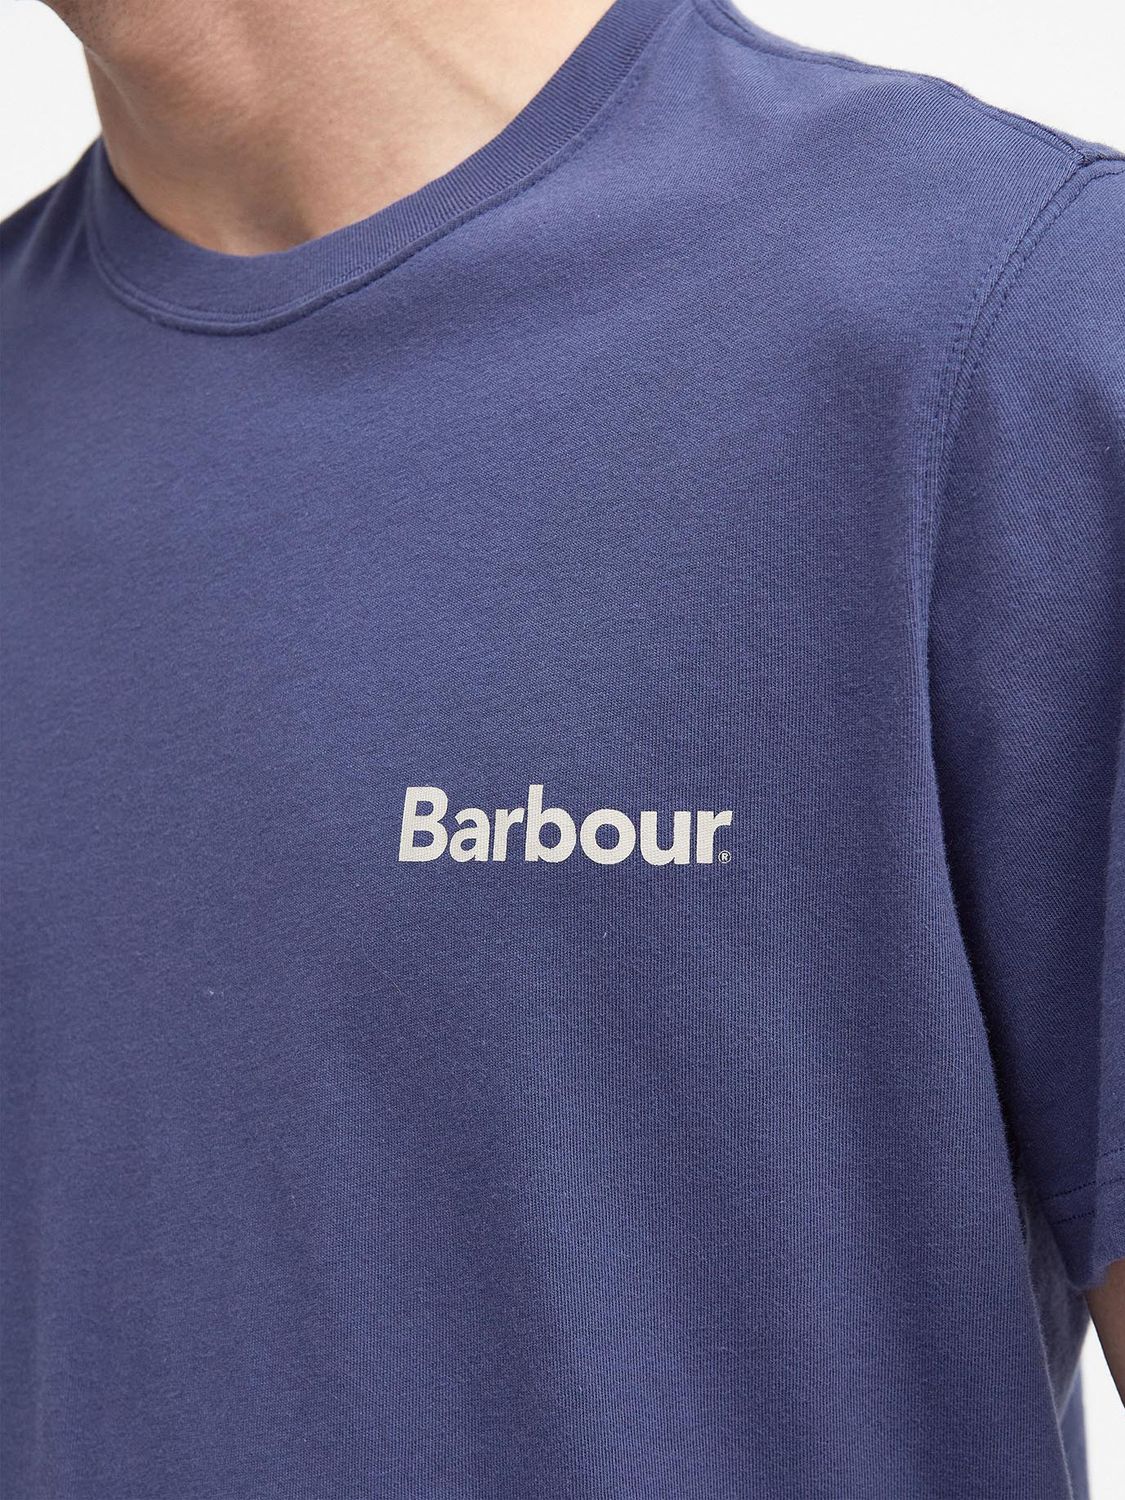 Barbour Hindle Graphic T-Shirt, Oceana, L